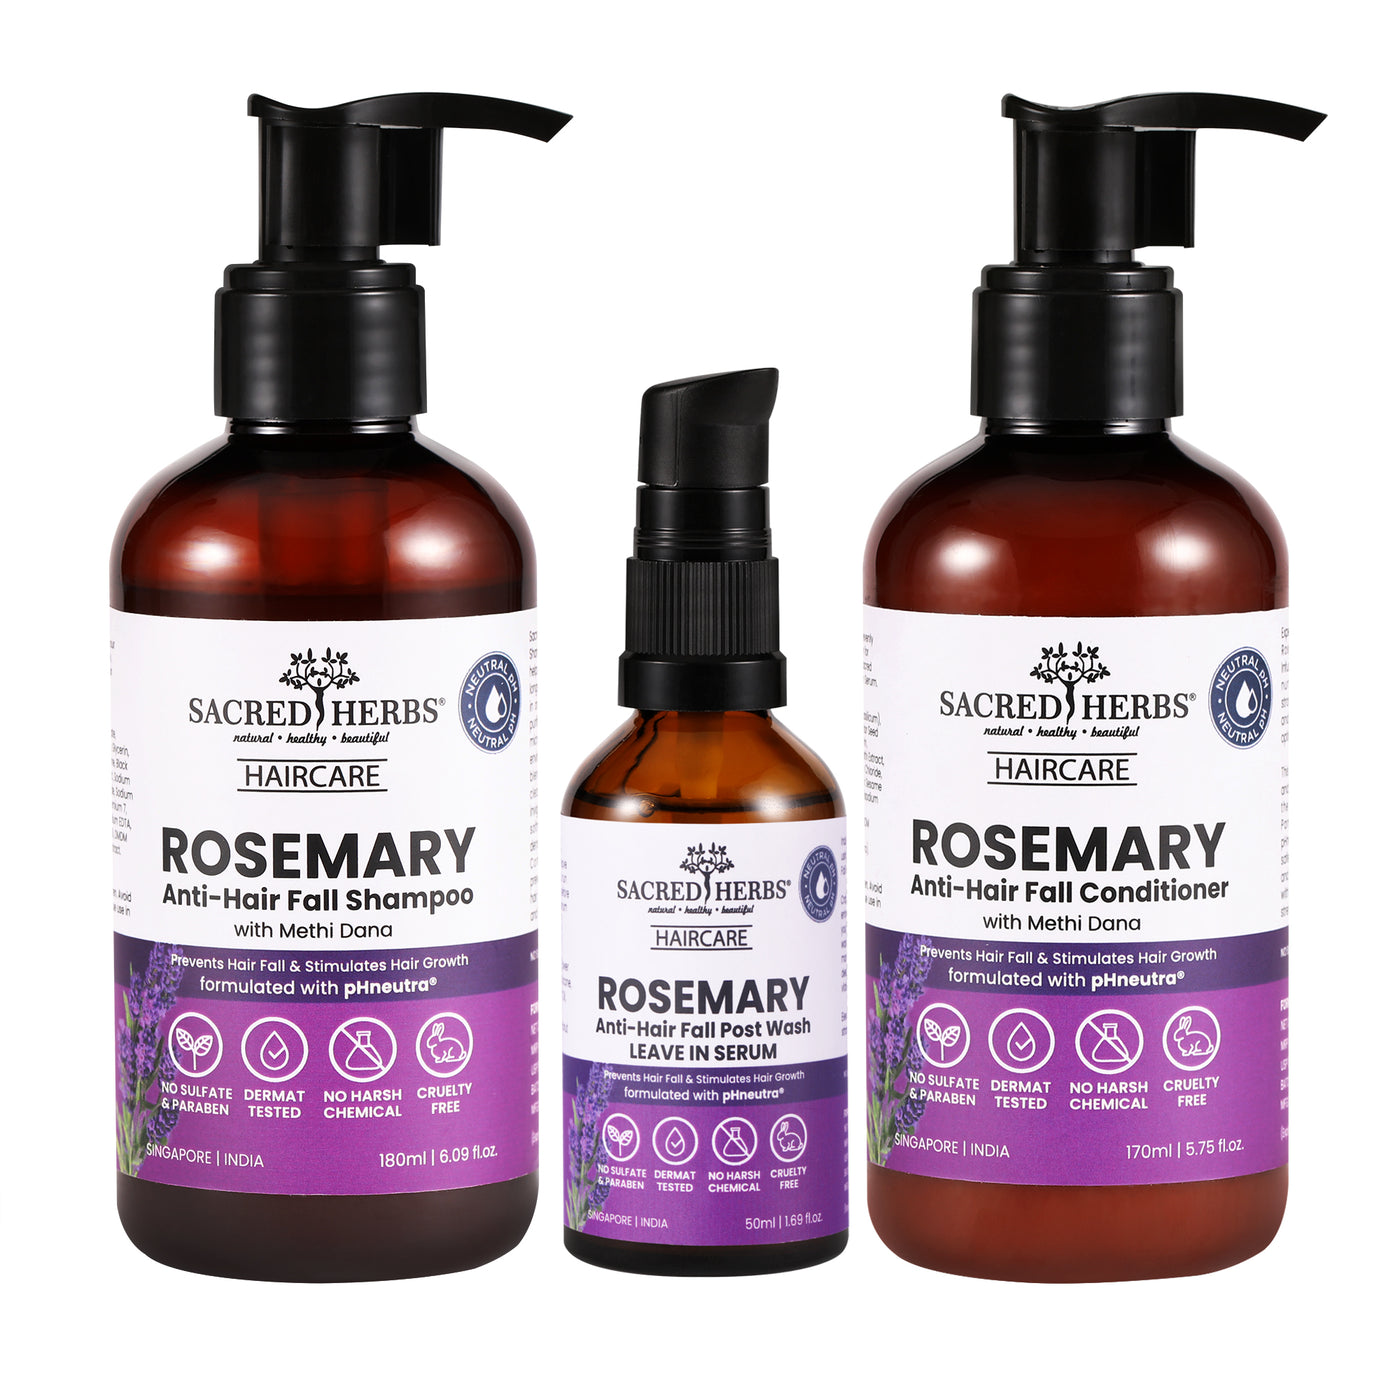 Rosemary Anti-Hair Fall  with Rosemary & Methi Dana Value Pack